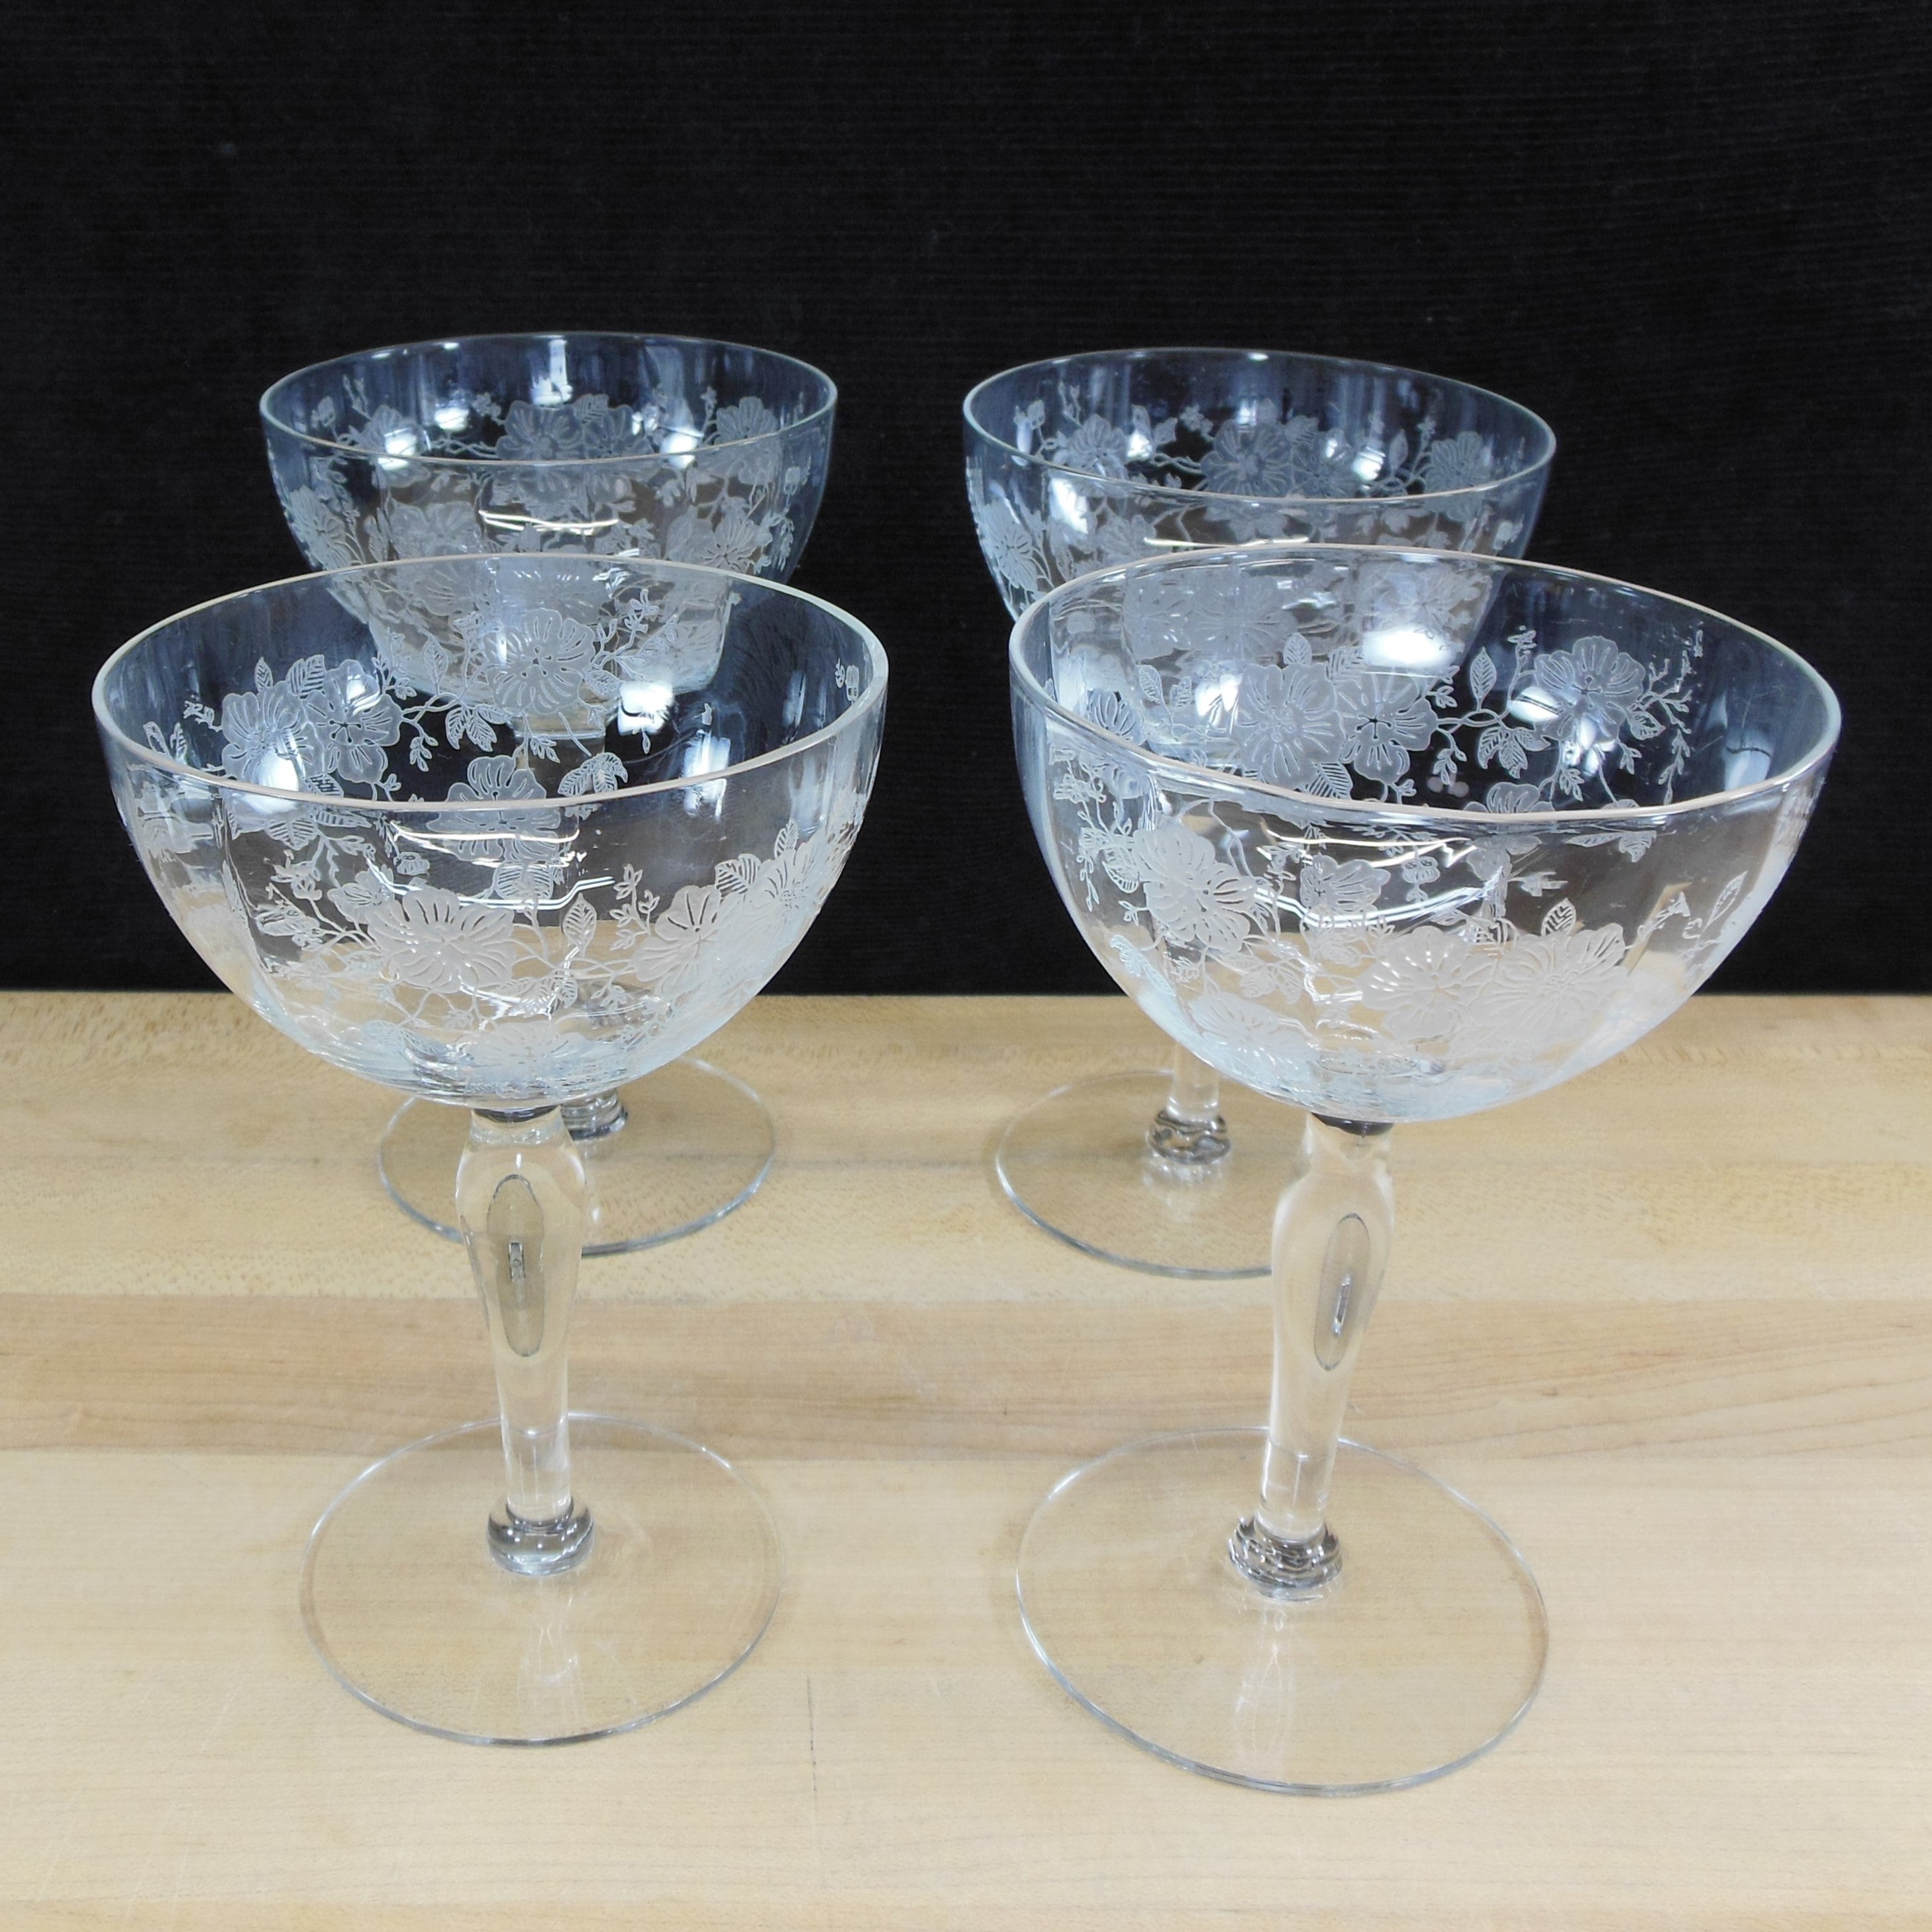 6 Vintage Etched Wine Glasses, 1950's, Vintage Tall Water Goblets, Vintage  Weddings ~ Wedding Toasting Wine Glasses, Unique Wine glasses